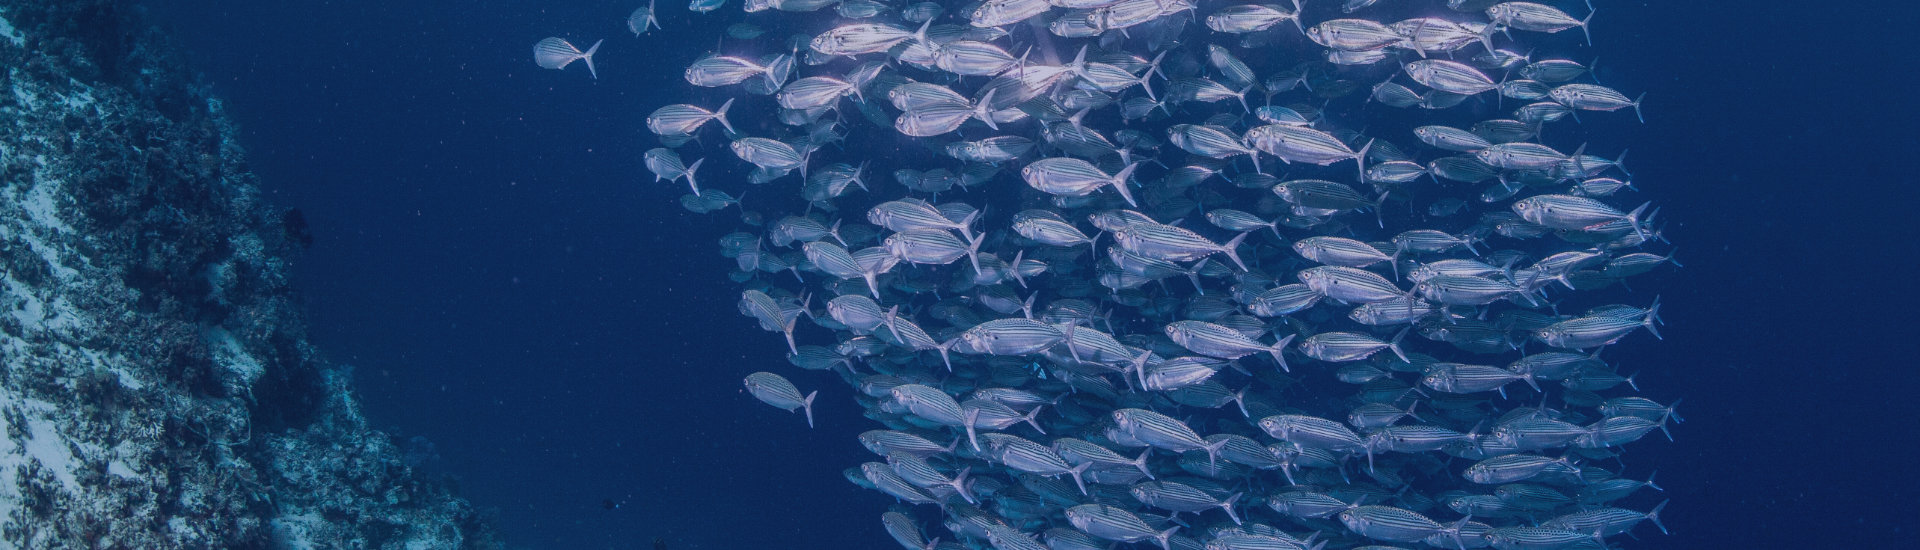 large-school-of-sardines-PZ5TQMD